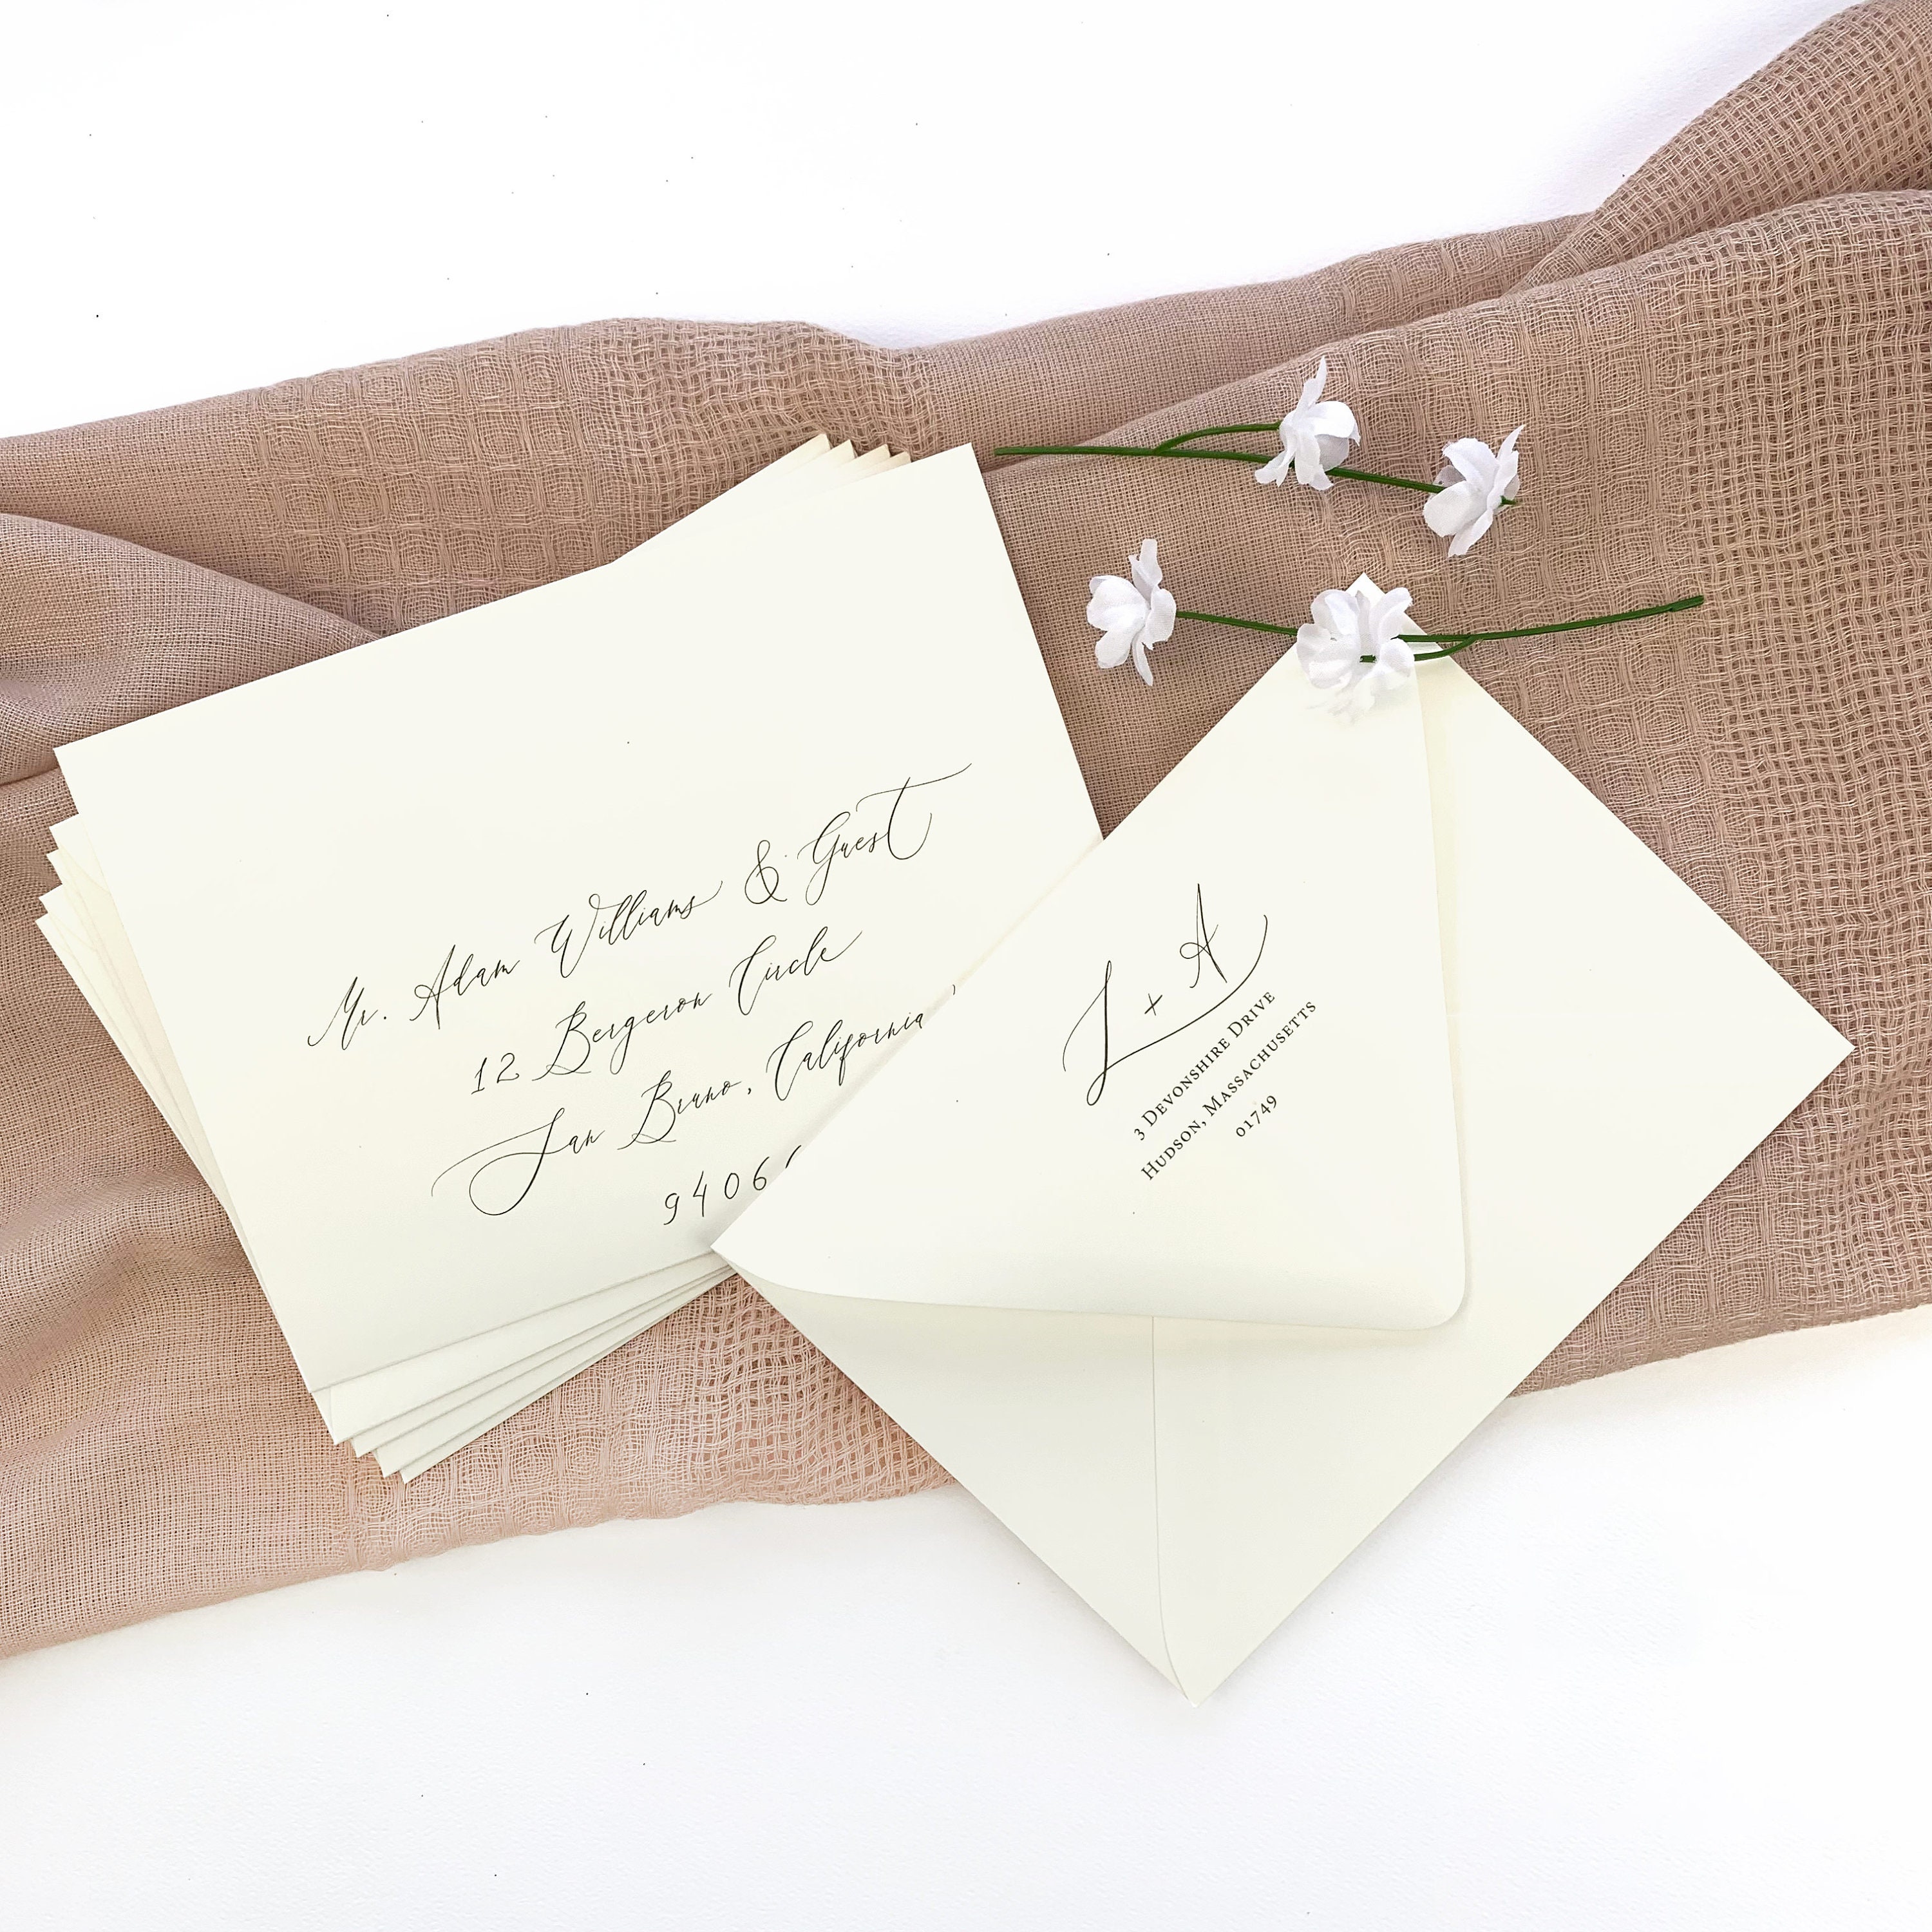 50 Pack A7 Metallic Gold Wedding Invitation Self Seal Envelopes